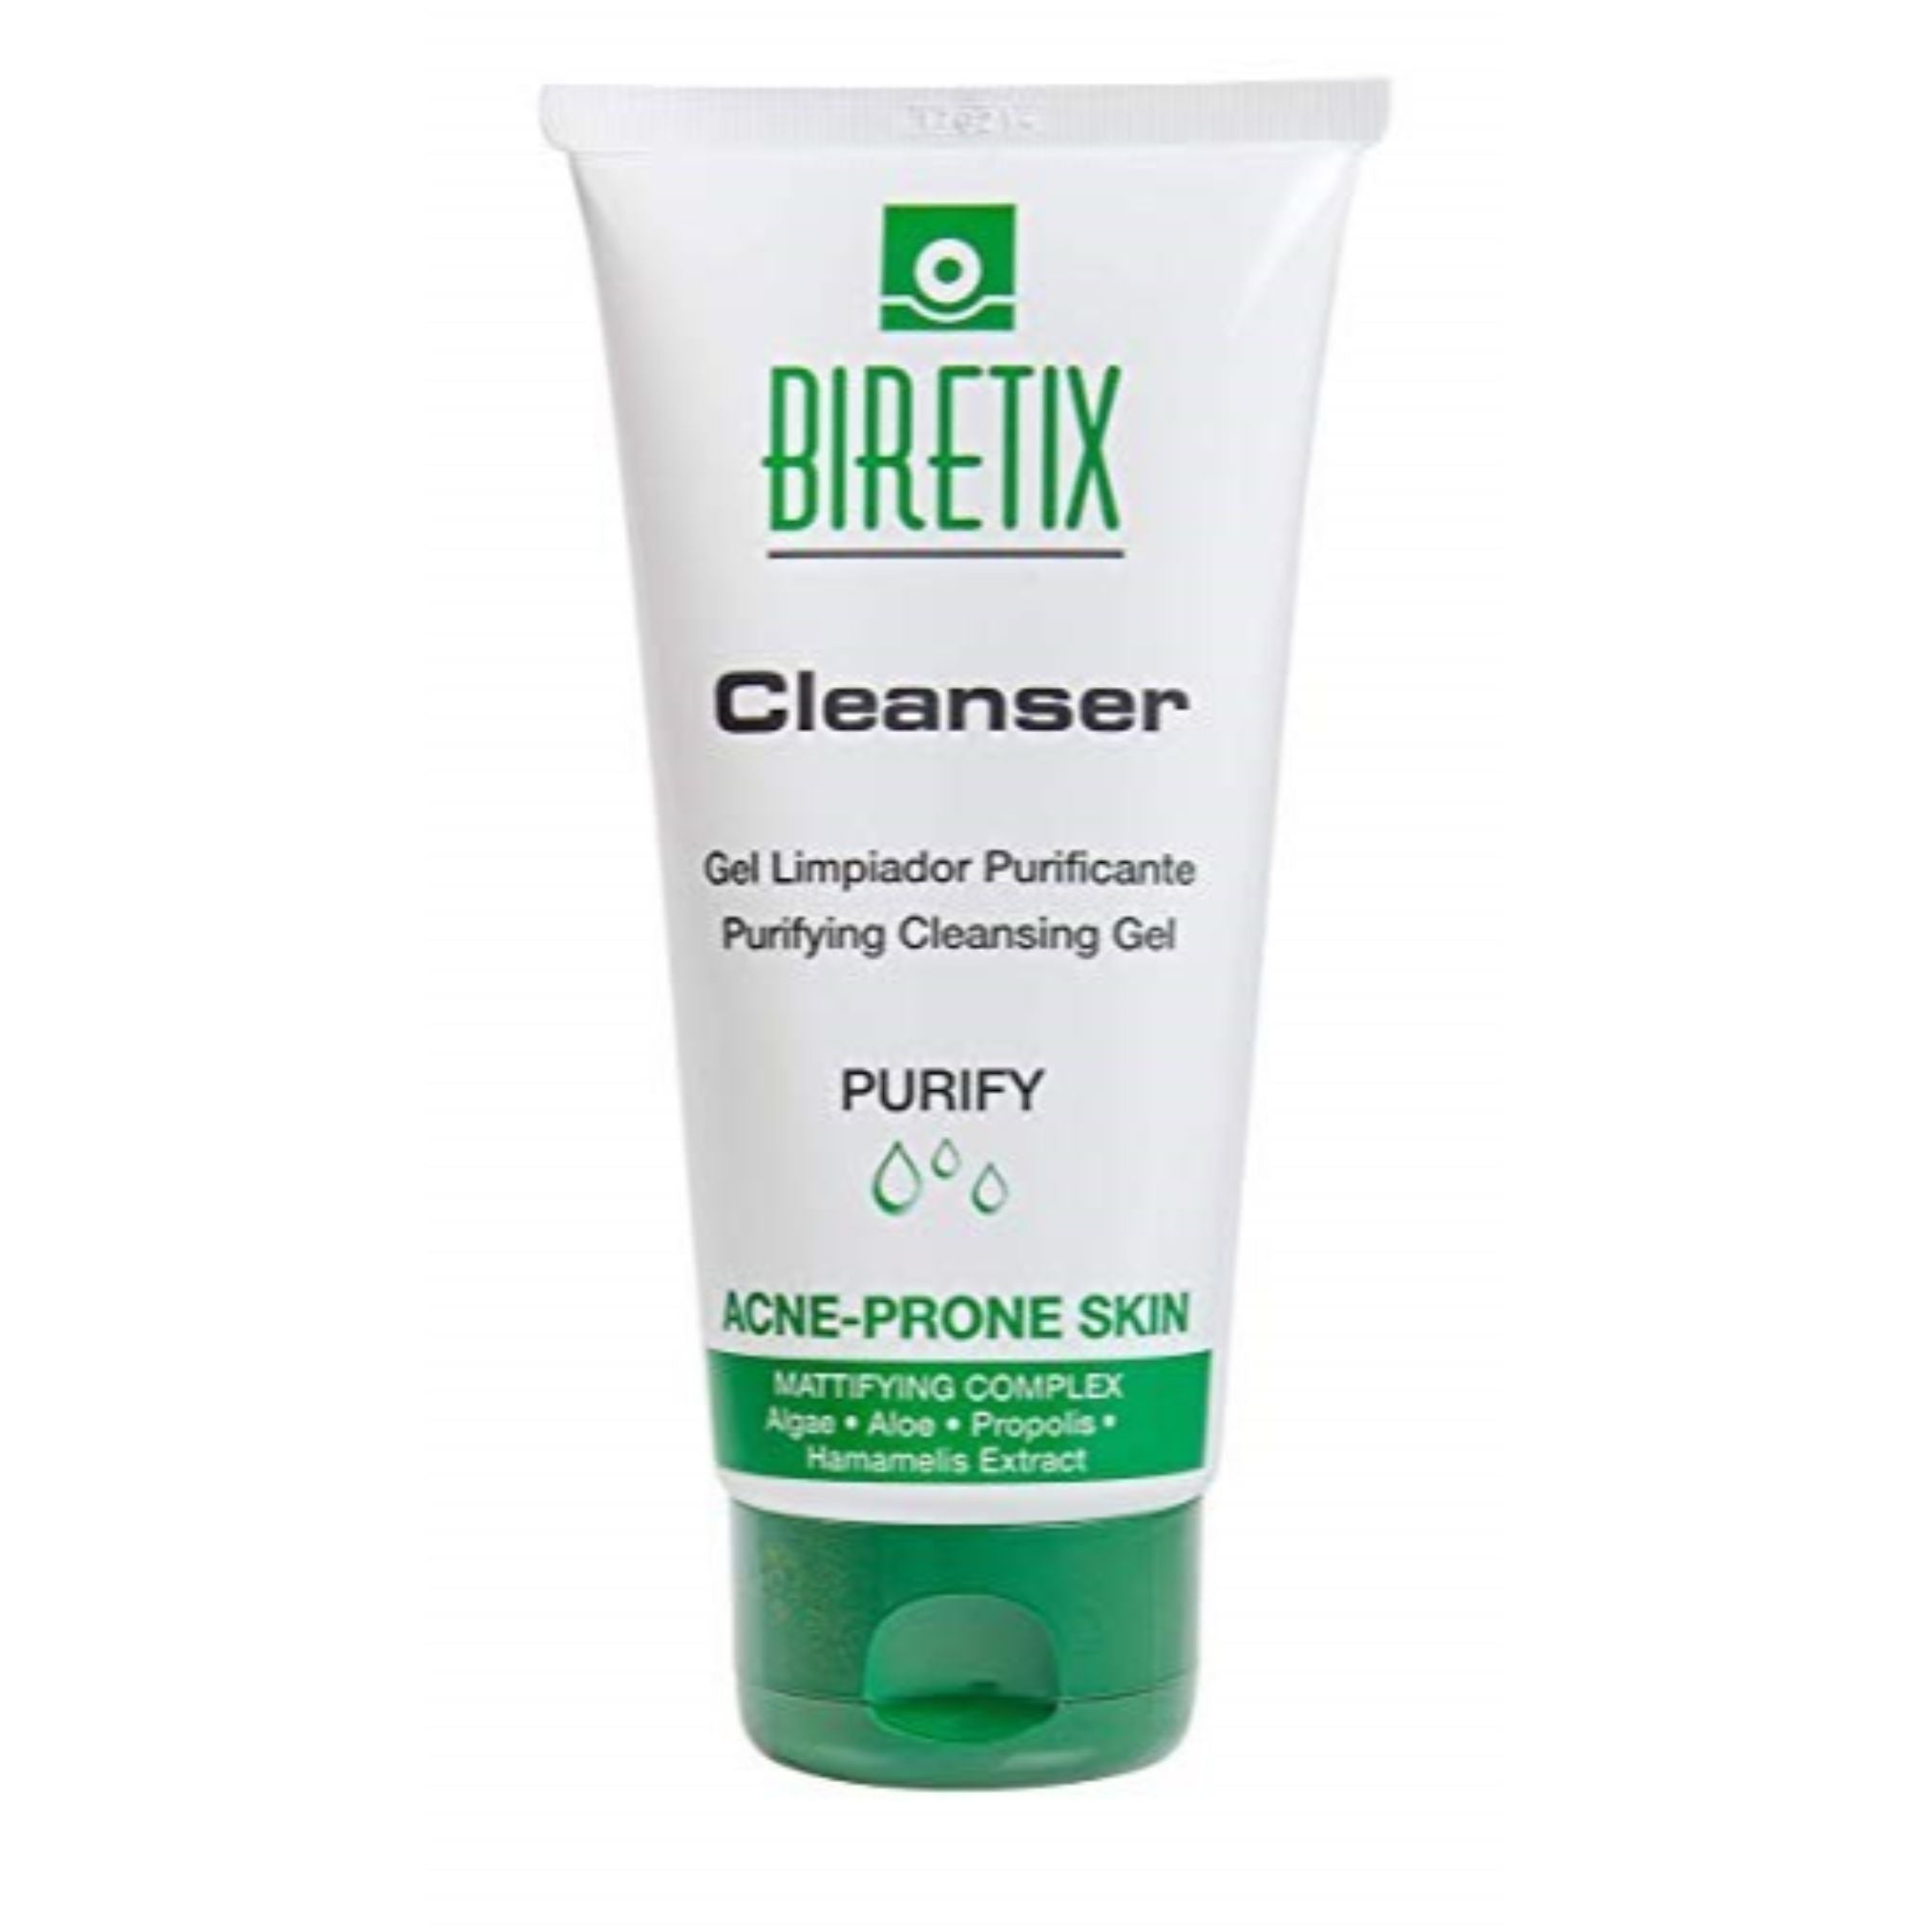 Biretix Cleanser Purifying Cleansing Gel 150ml